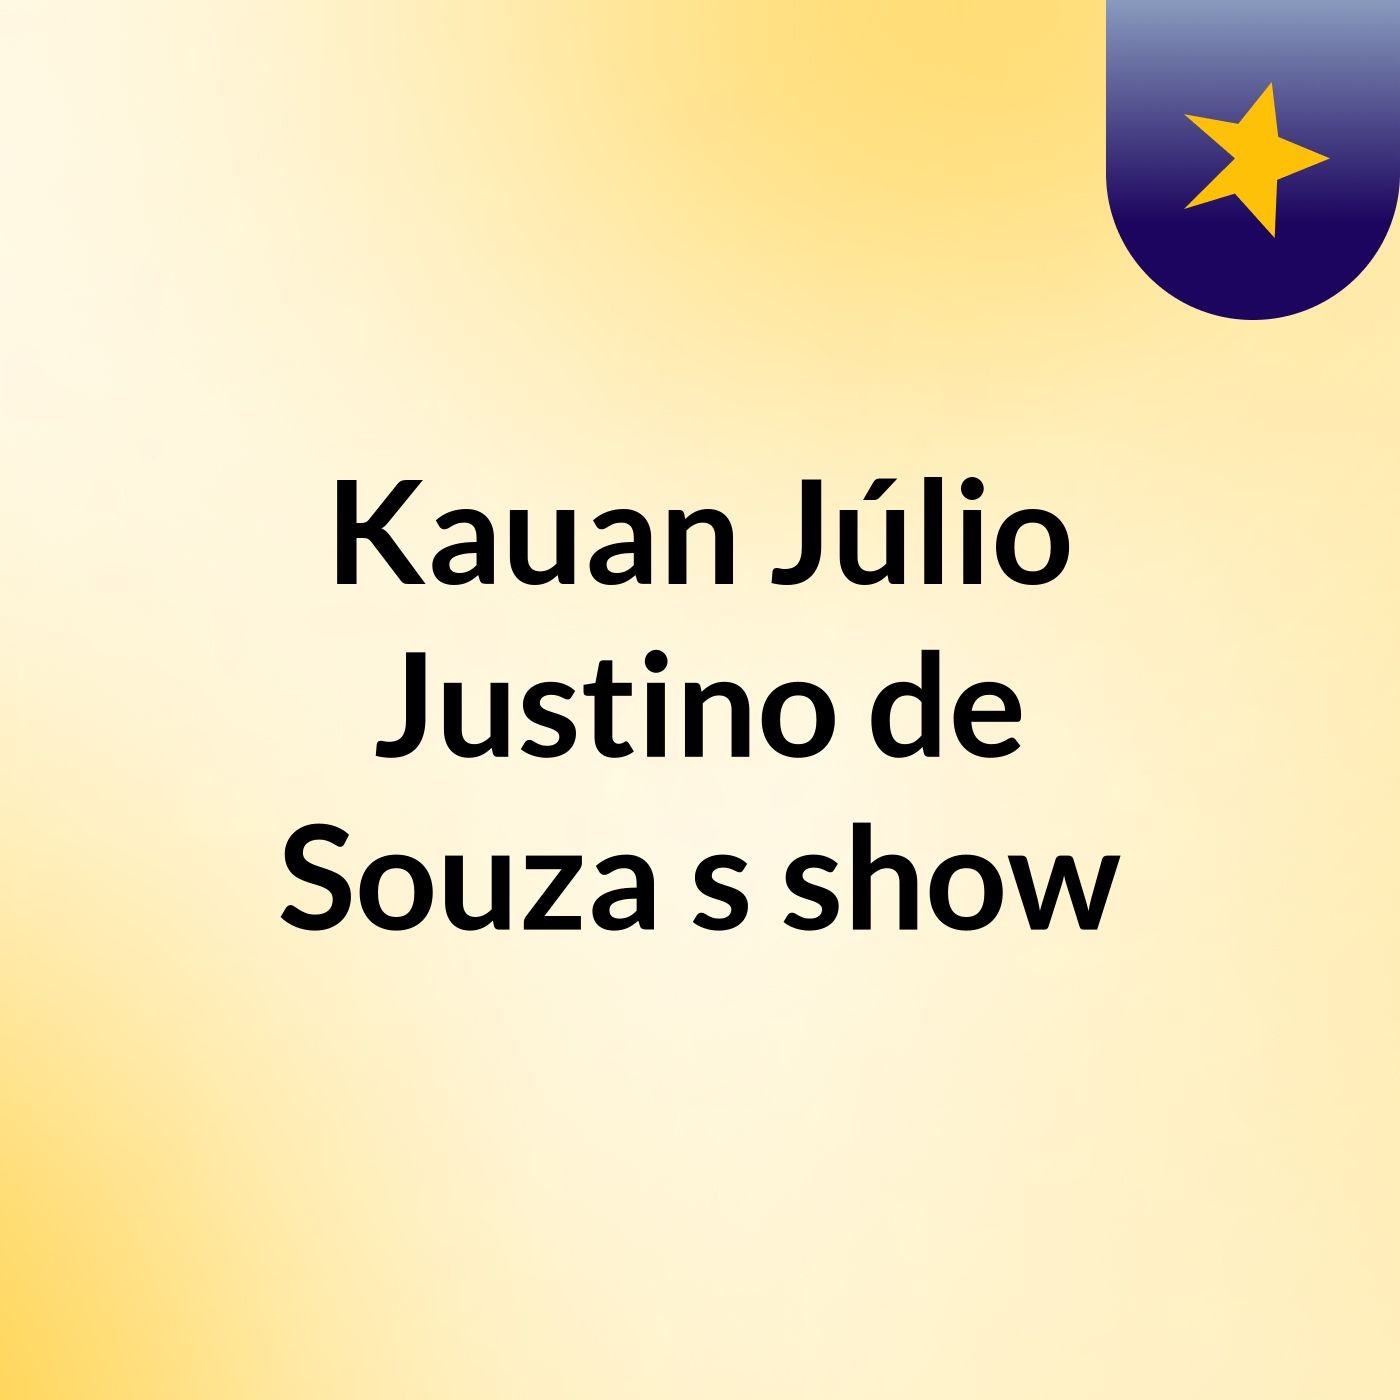 Kauan Júlio Justino de Souza's show